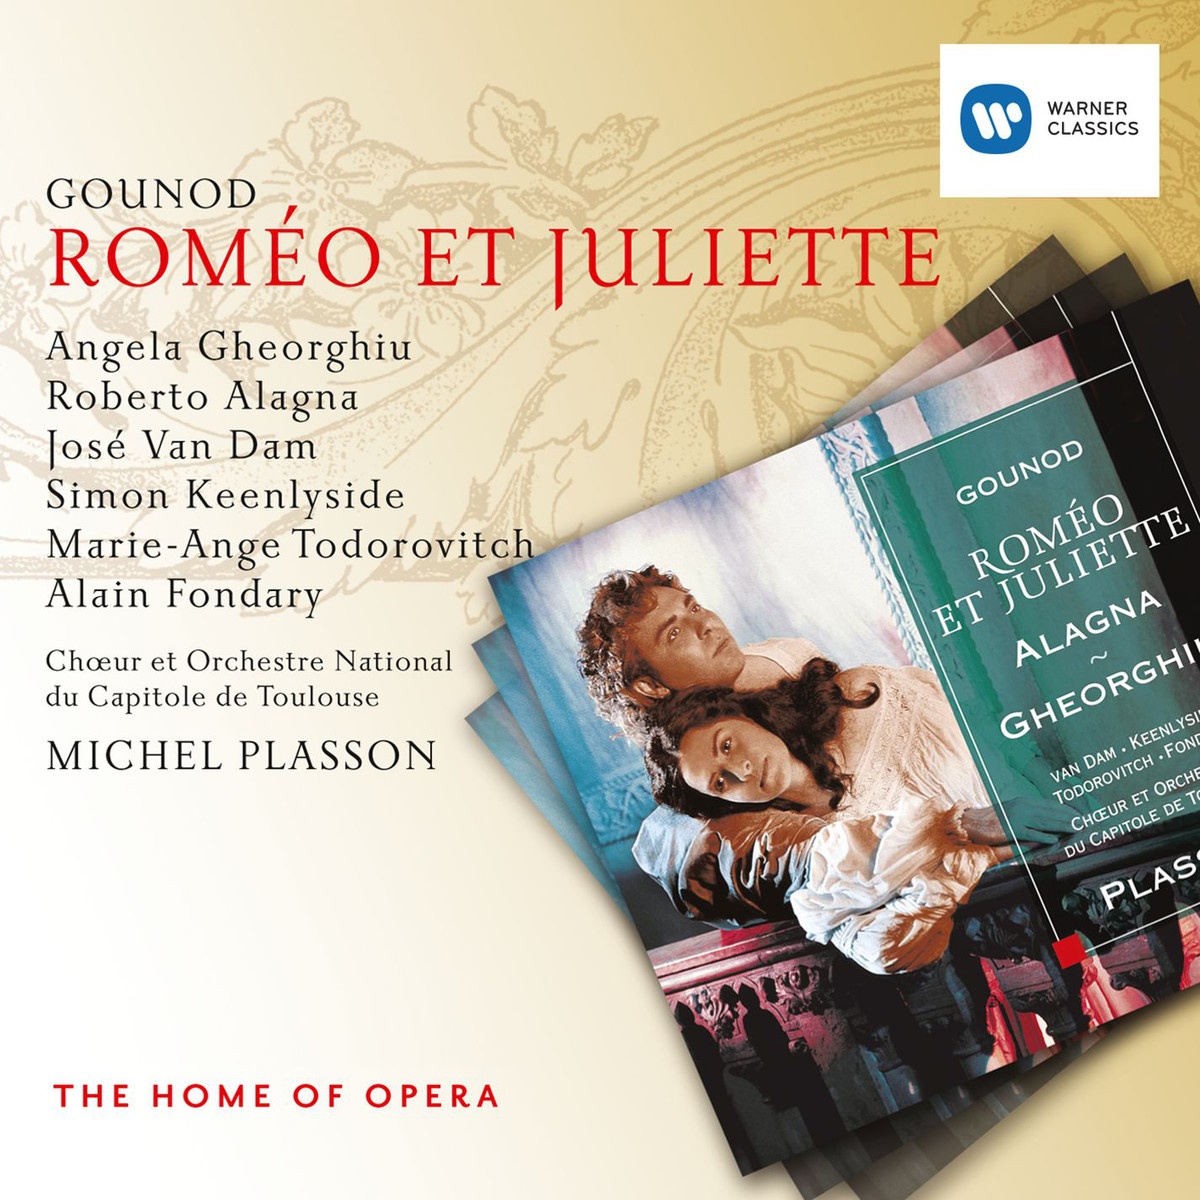 Rome o et Juliette, ACT I: Voyons nourrice, on m' attend, parle vite! Juliette Gertrude